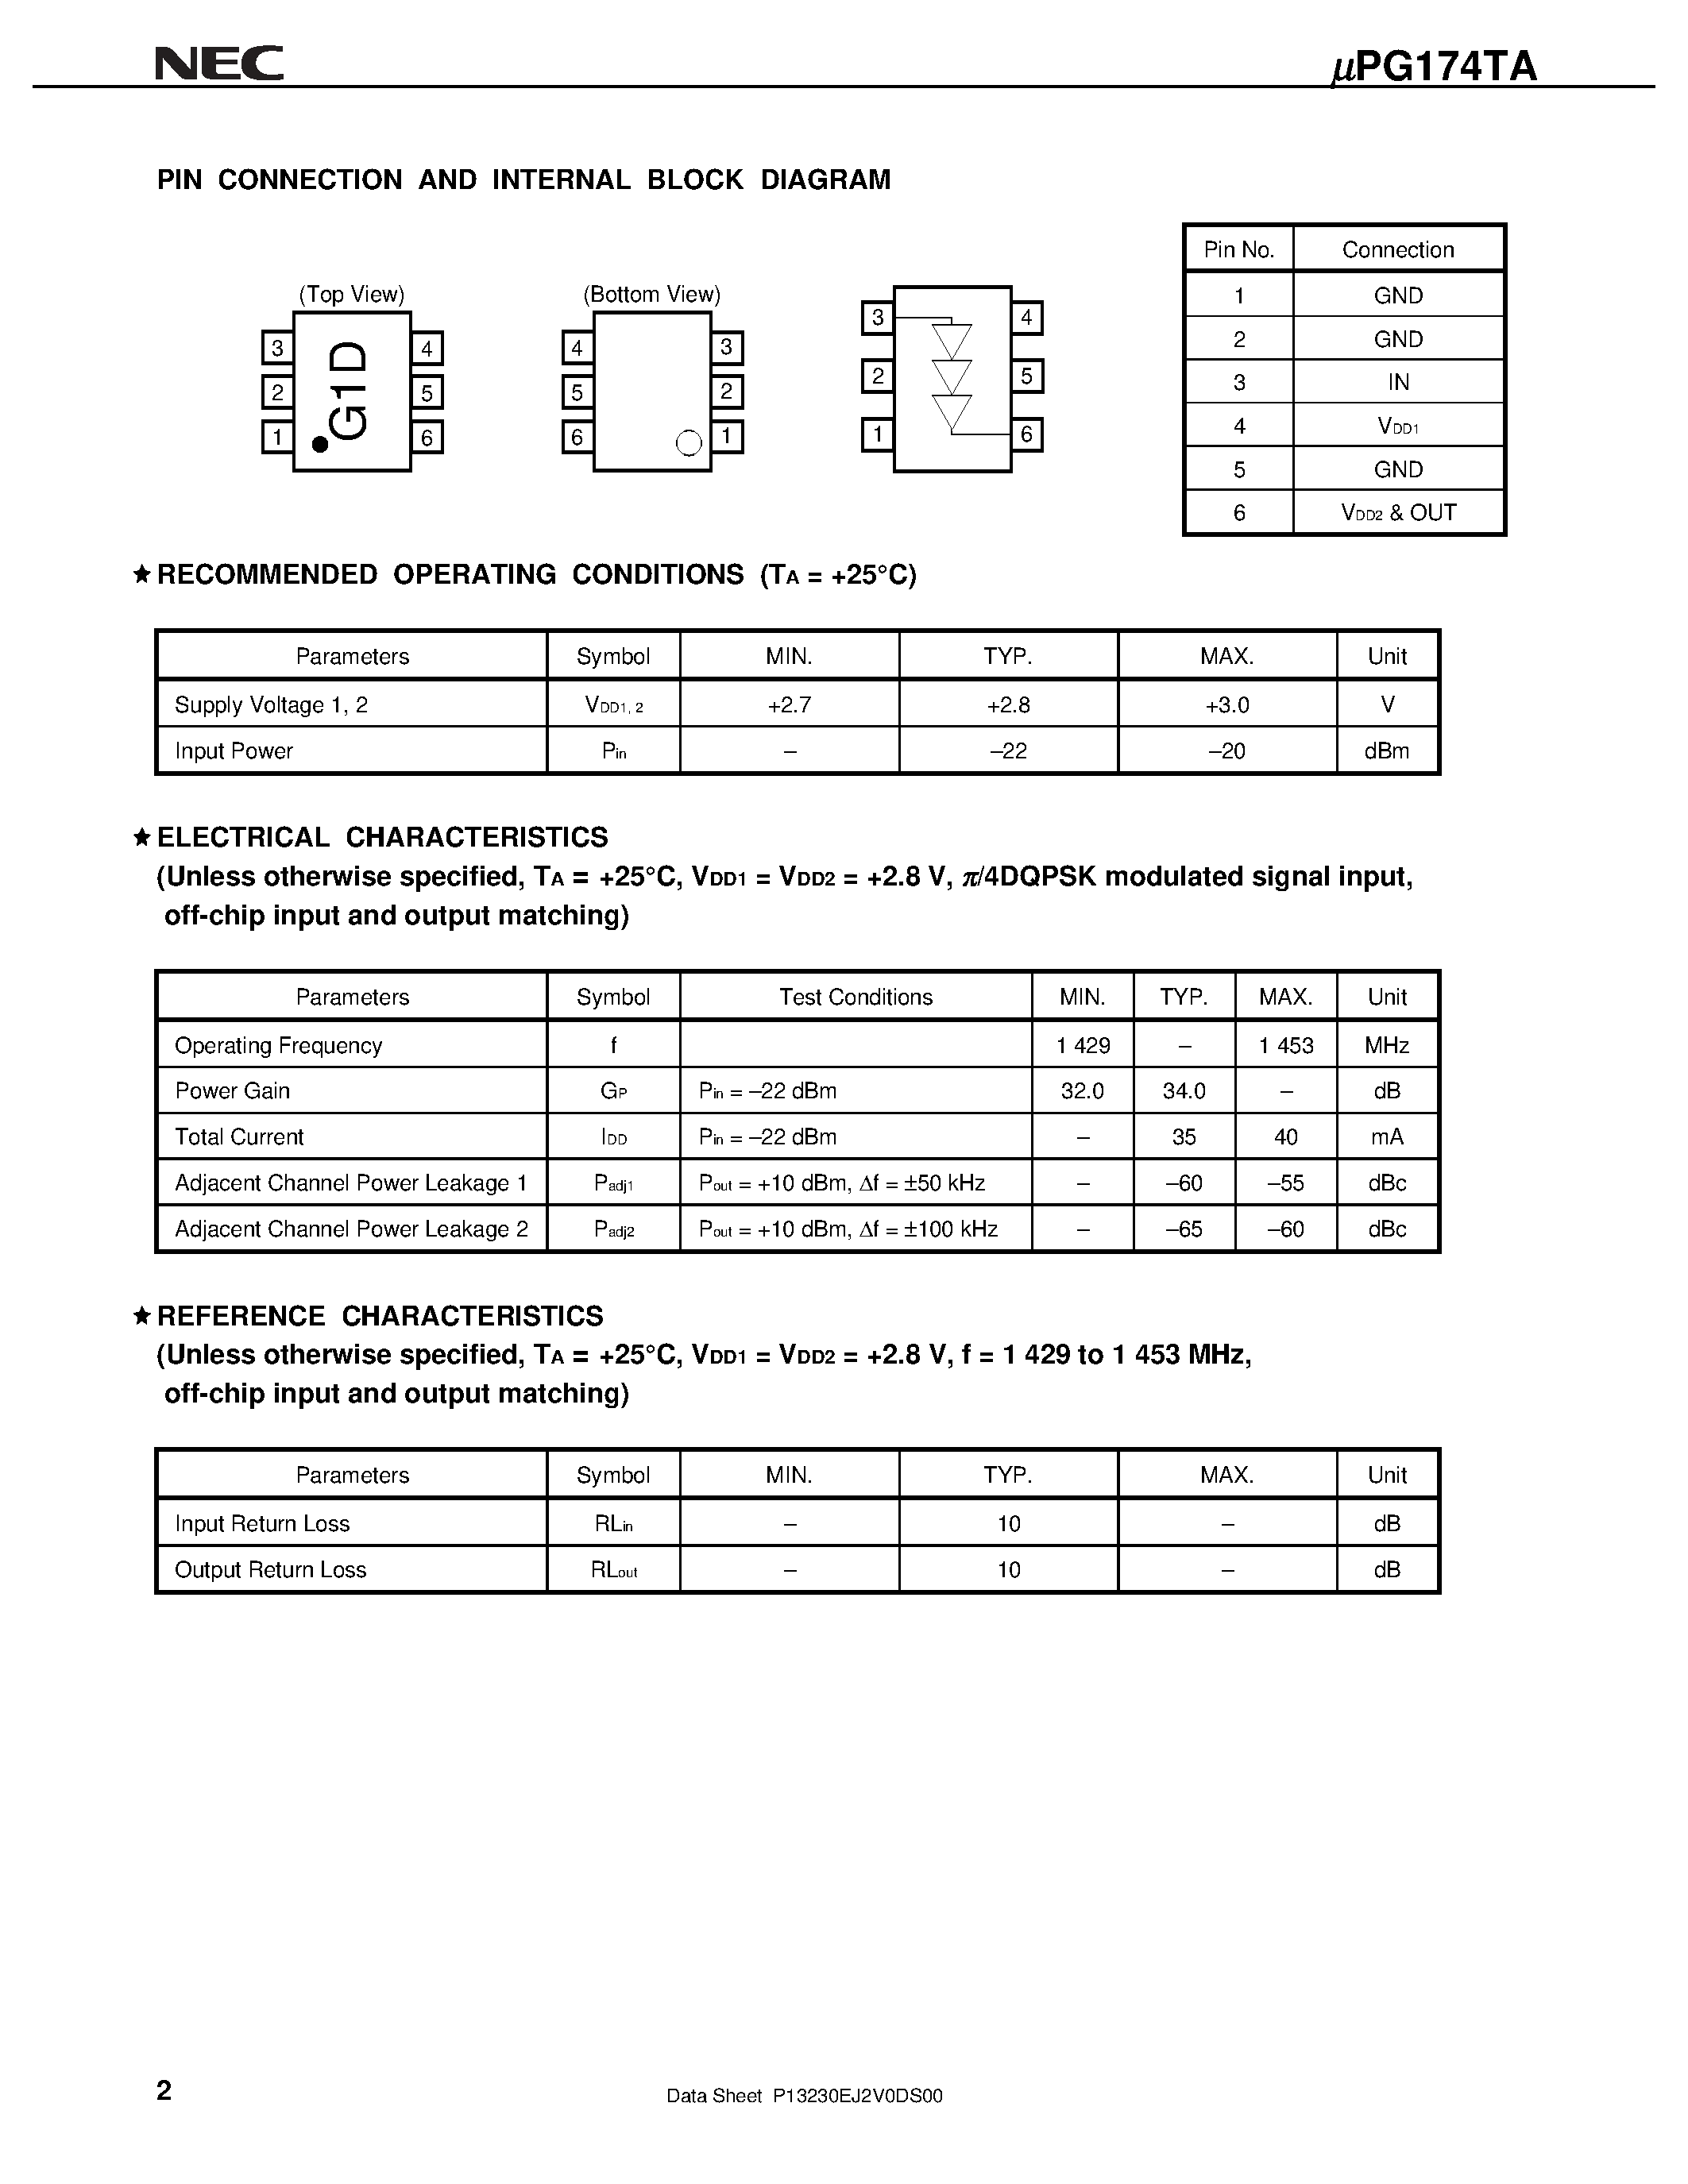 Datasheet UPG174TA-E3 - L-BAND PA DRIVER AMPLIFIER page 2